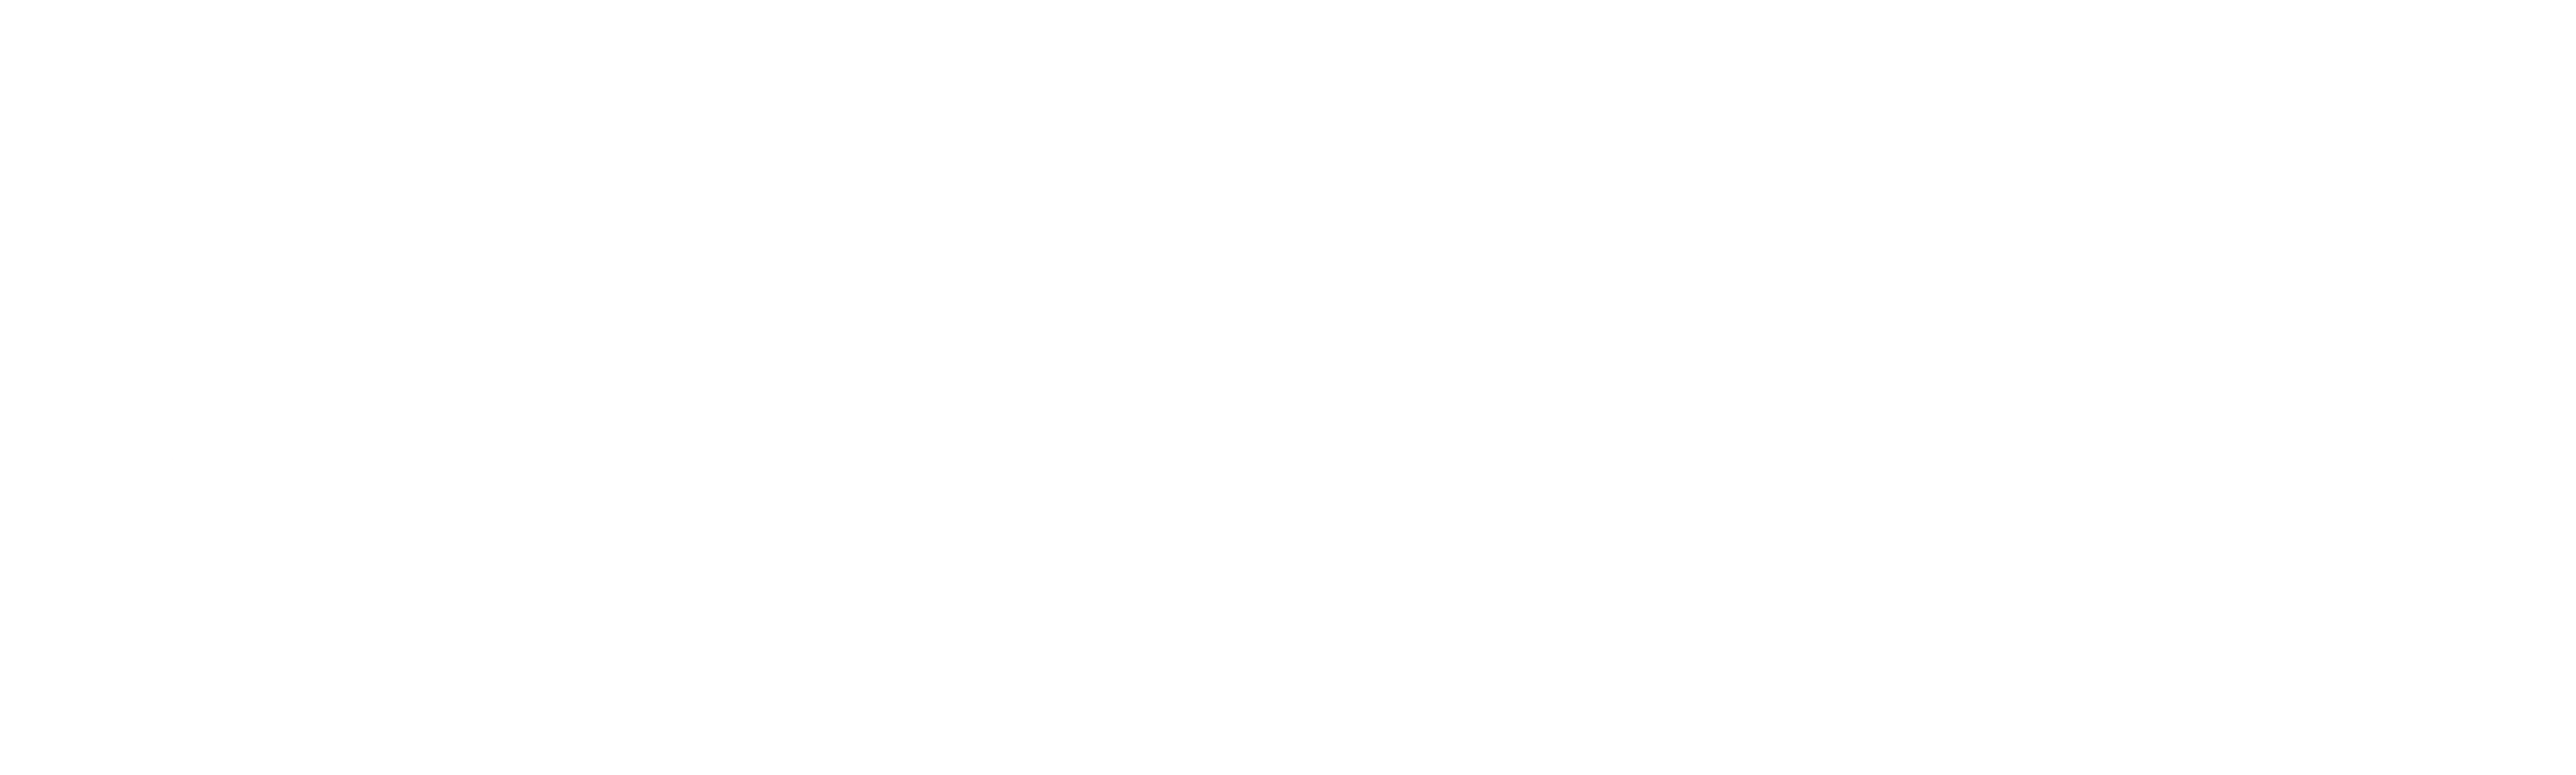 SPAR INTERNATIONAL - Logo